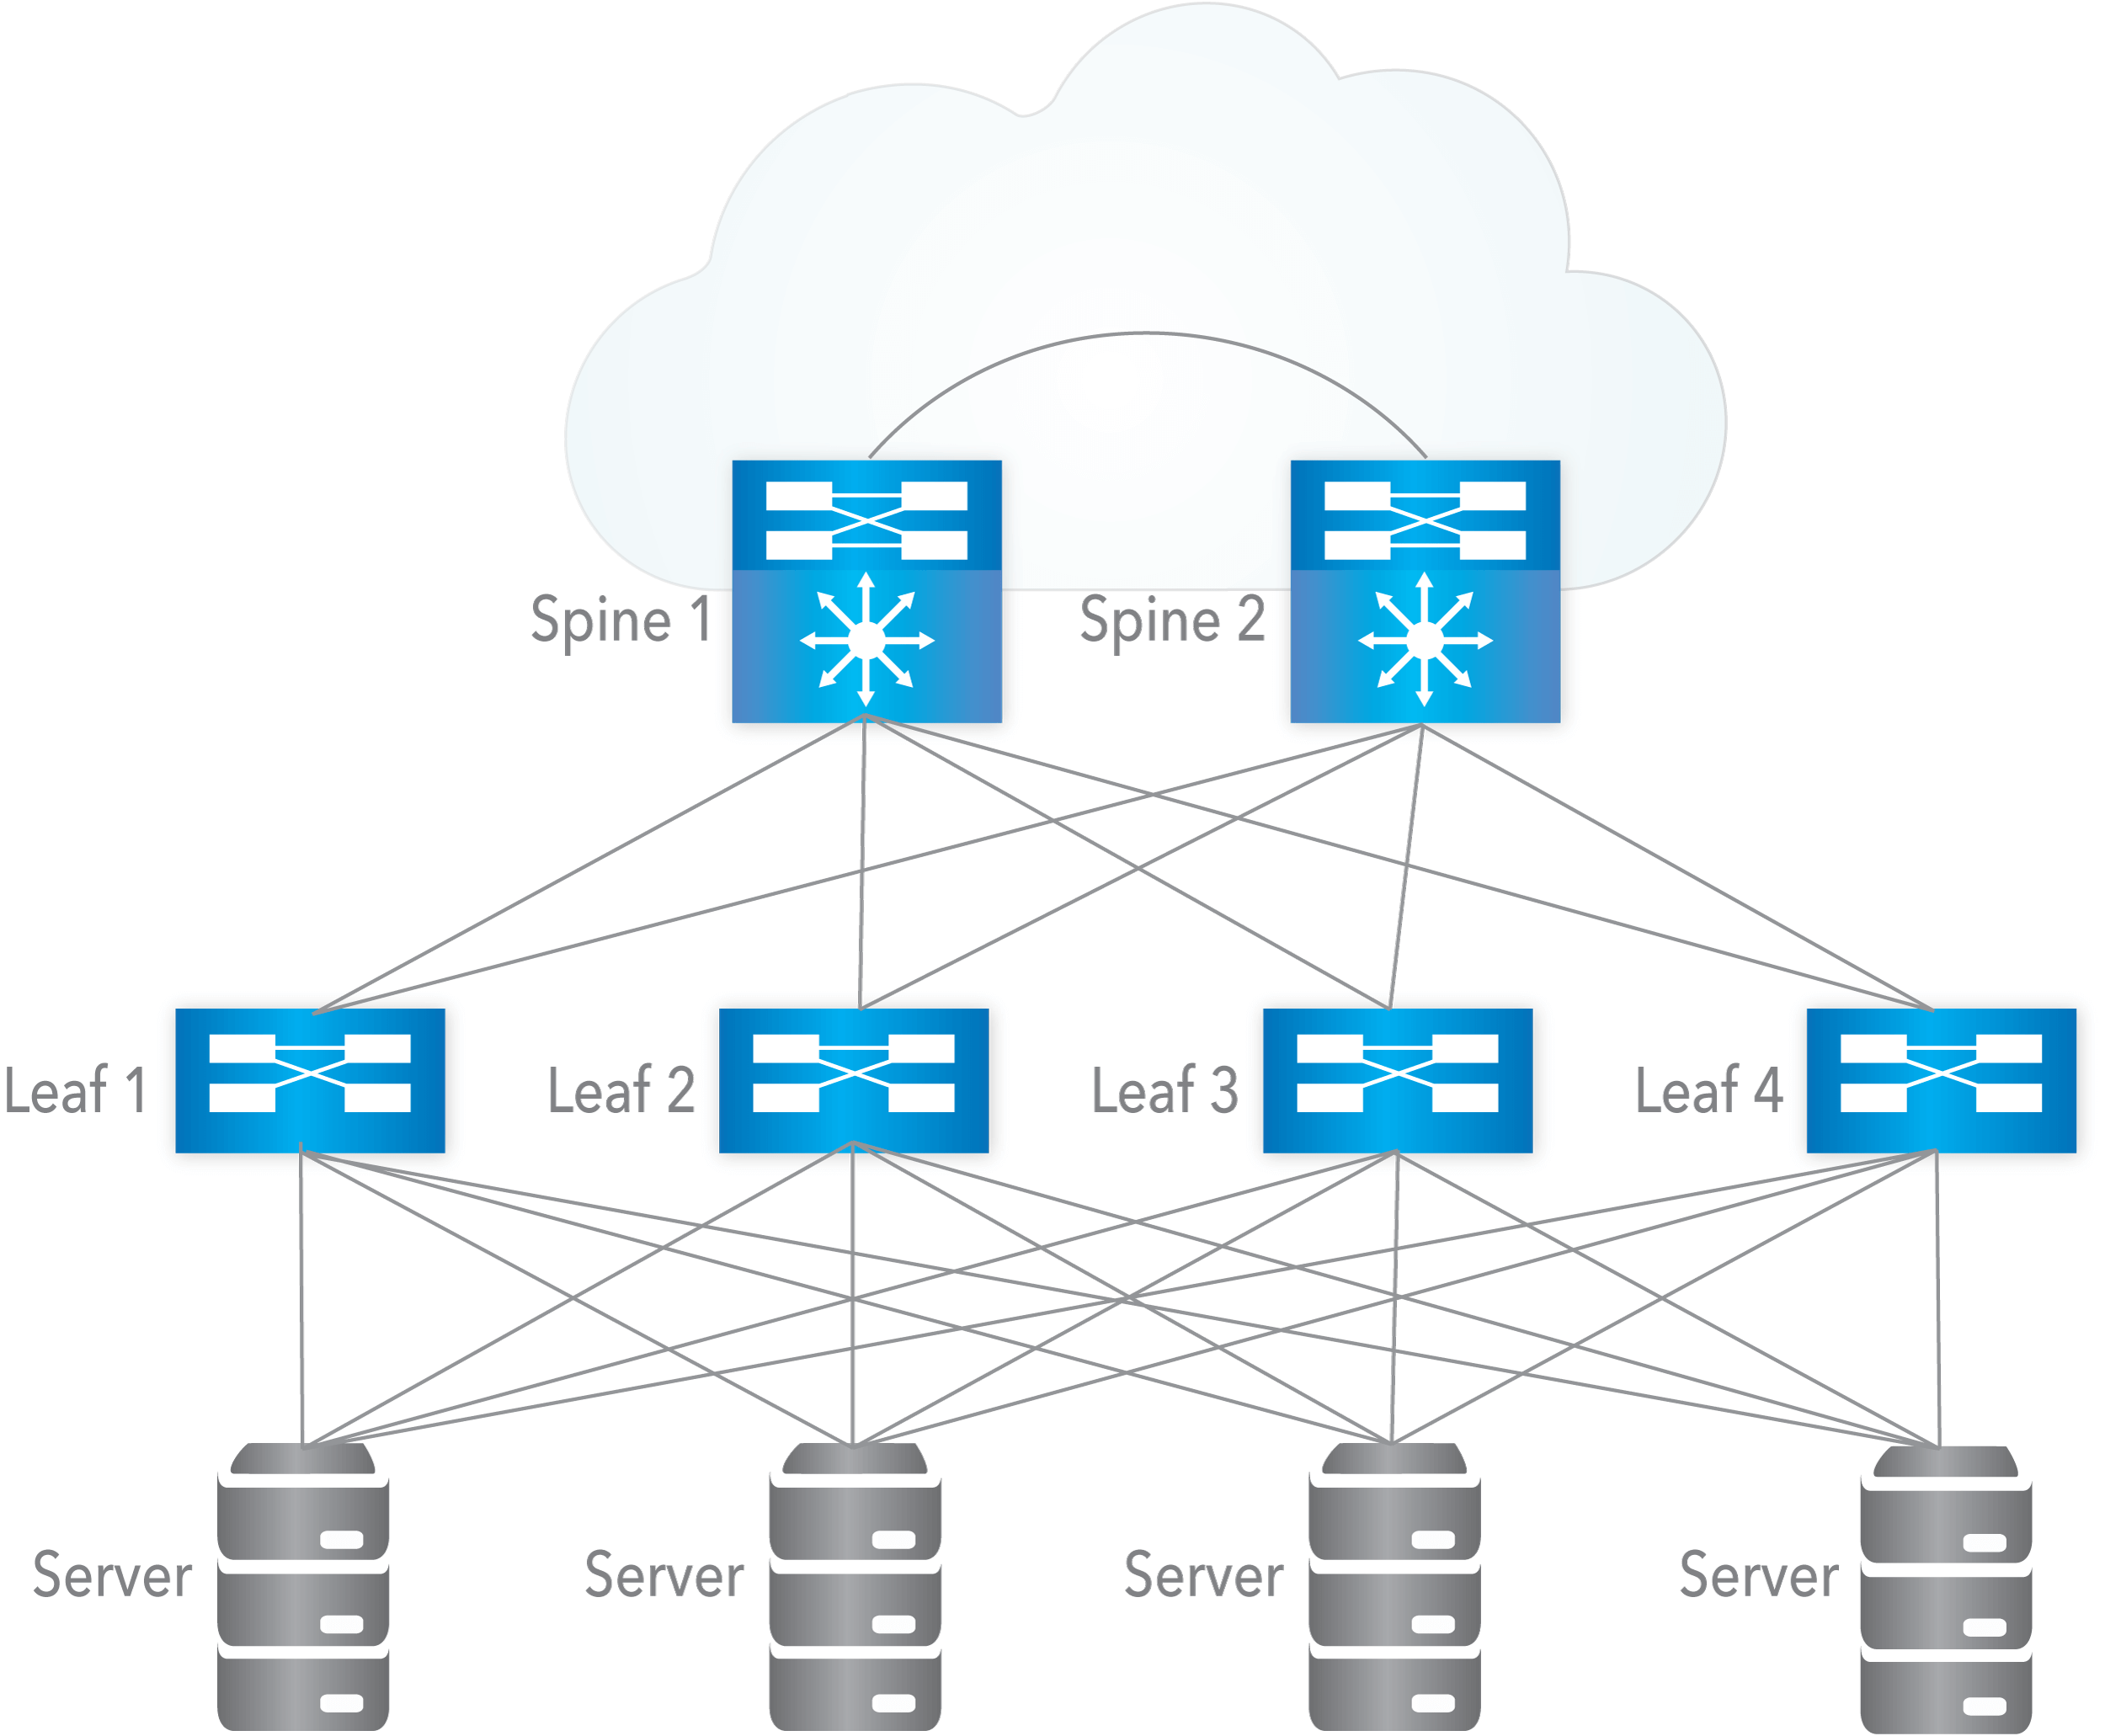 Example EVPN Network using VXLAN Overlay in a Data Center